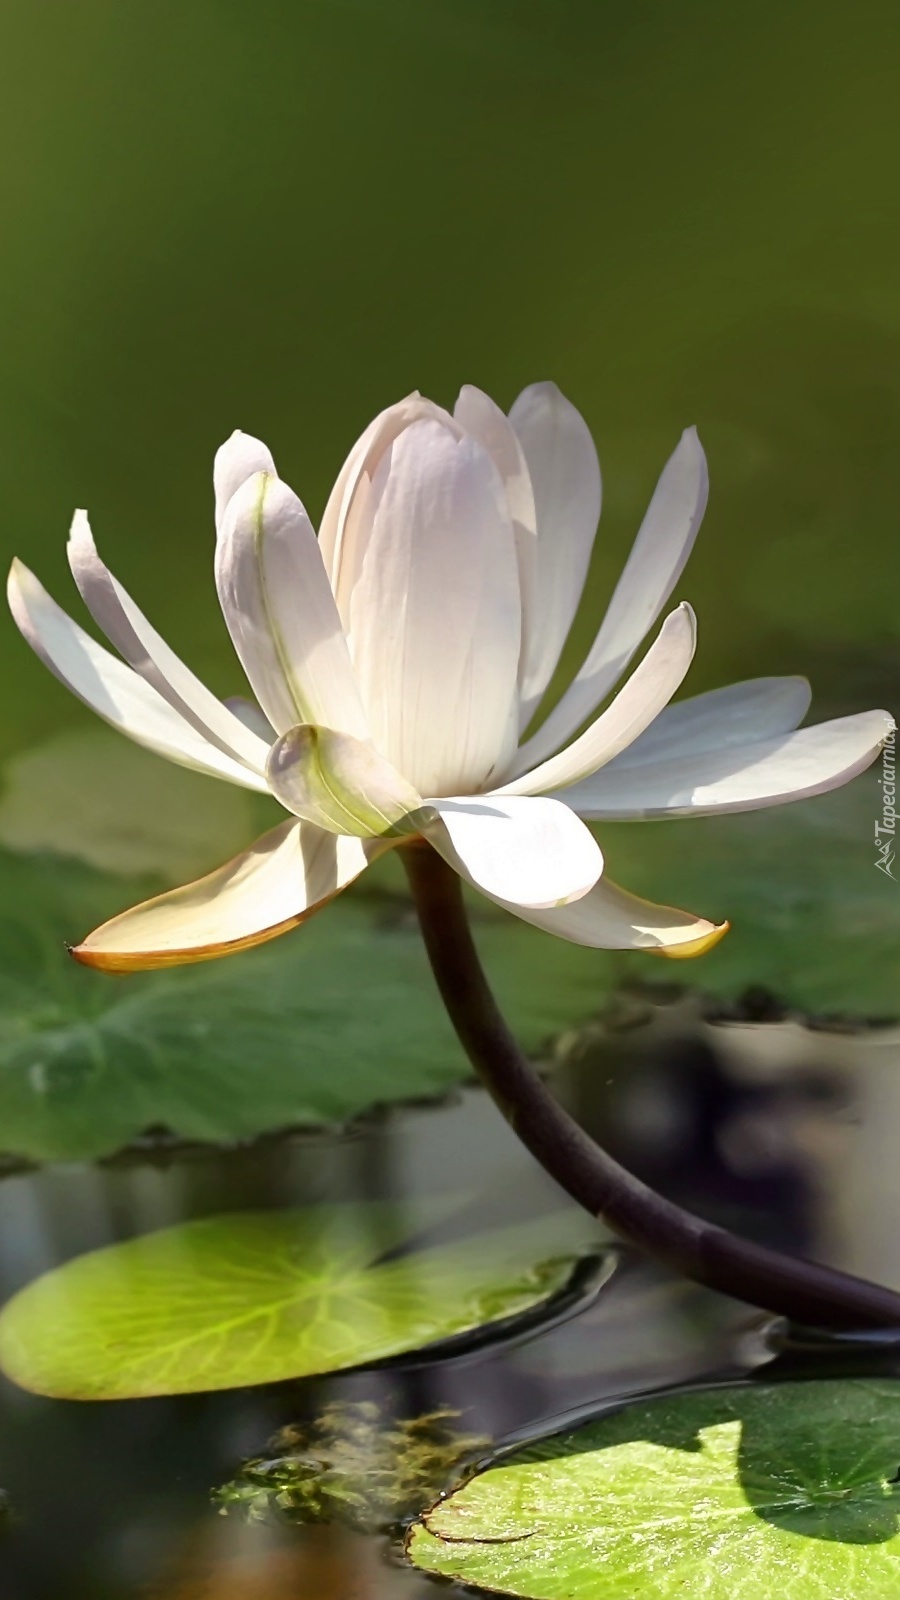 Biała lilia wodna